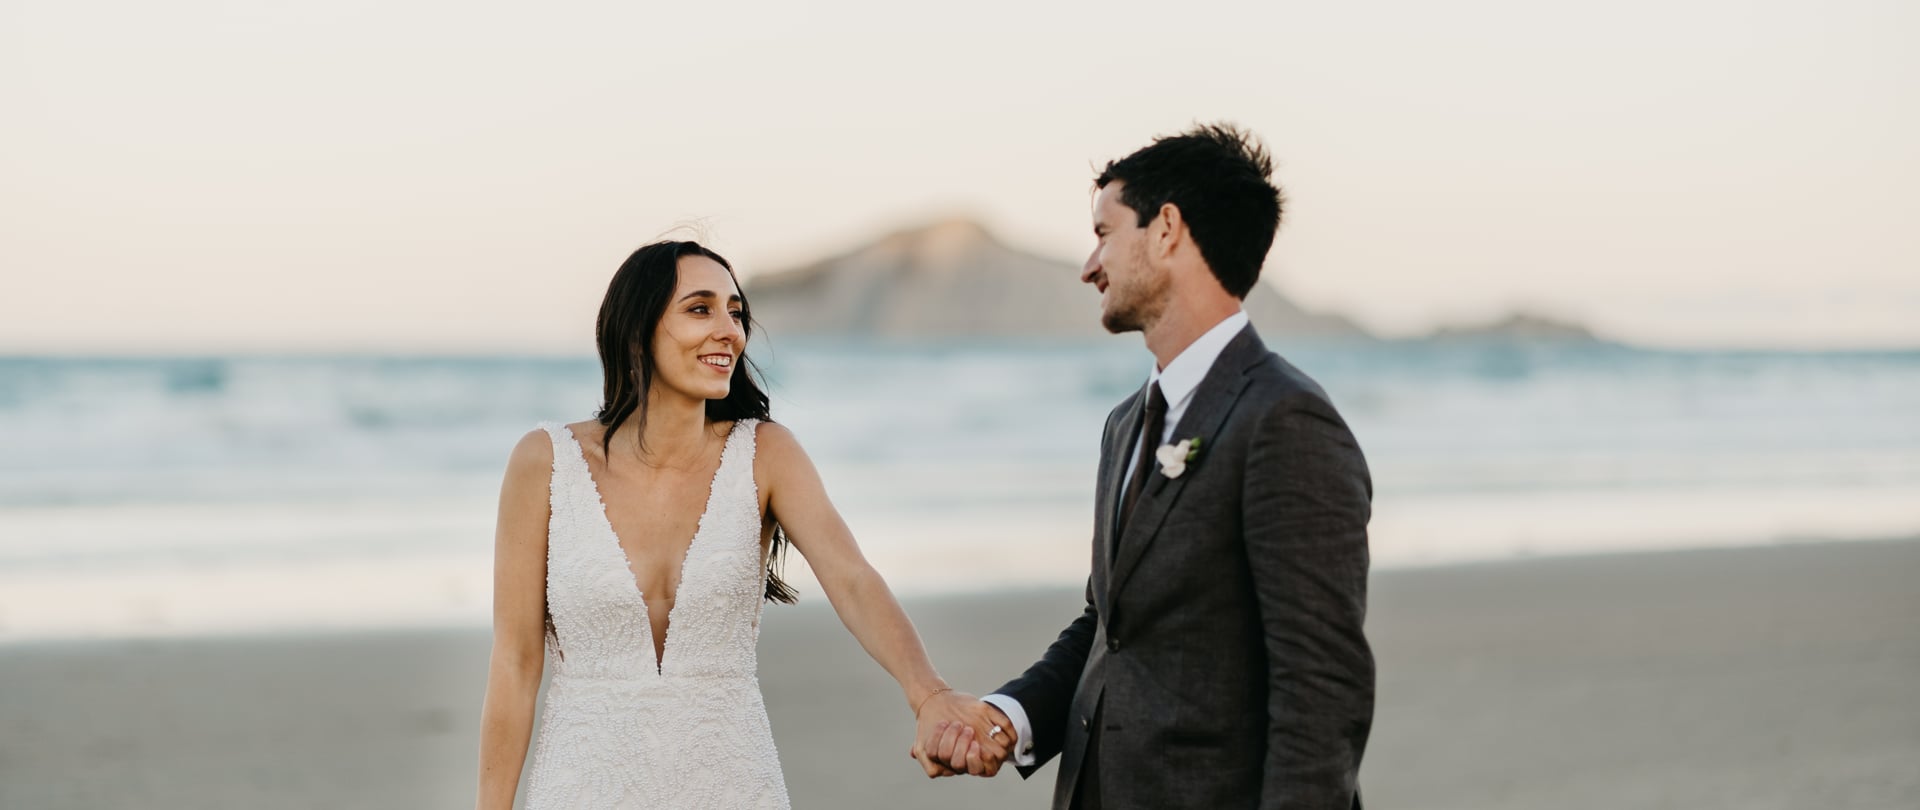 Casey & Wills Wedding Video Filmed at Hawke's Bay, New Zealand